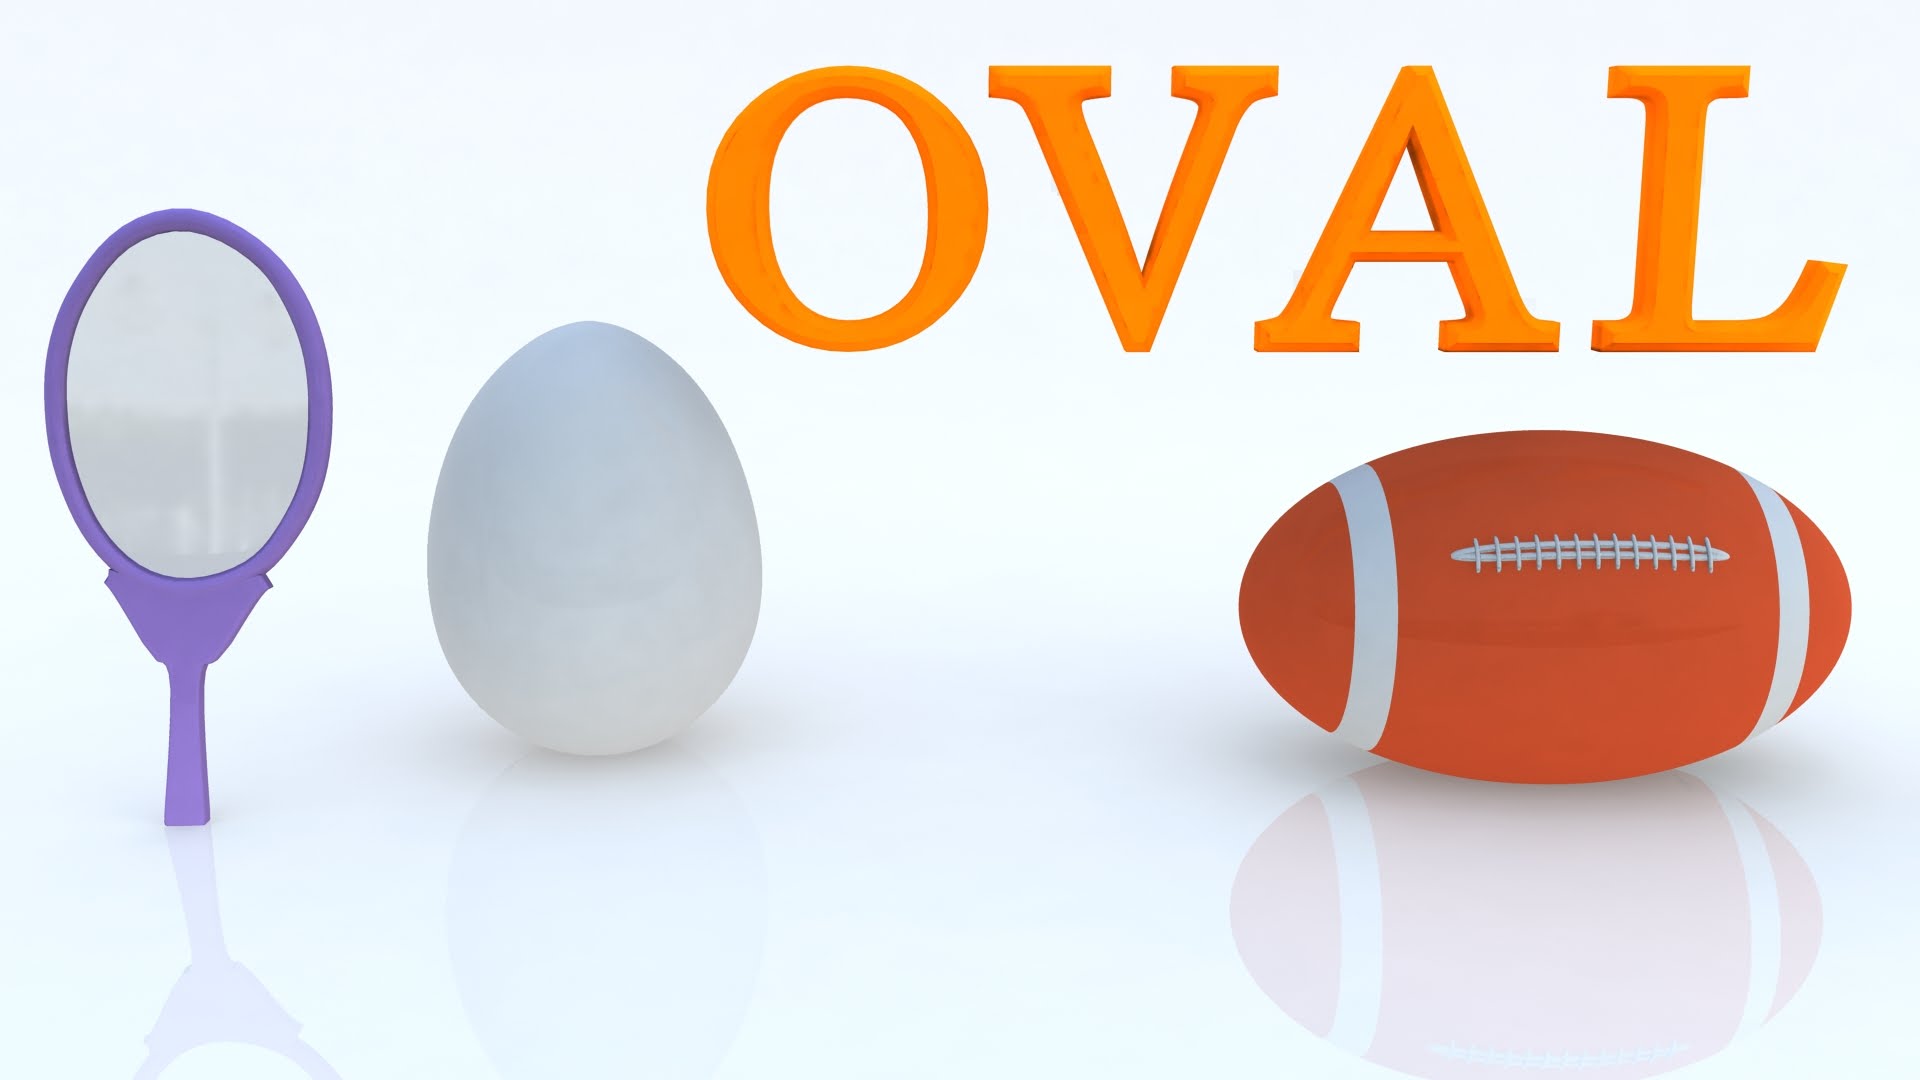 Oval Shaped objects